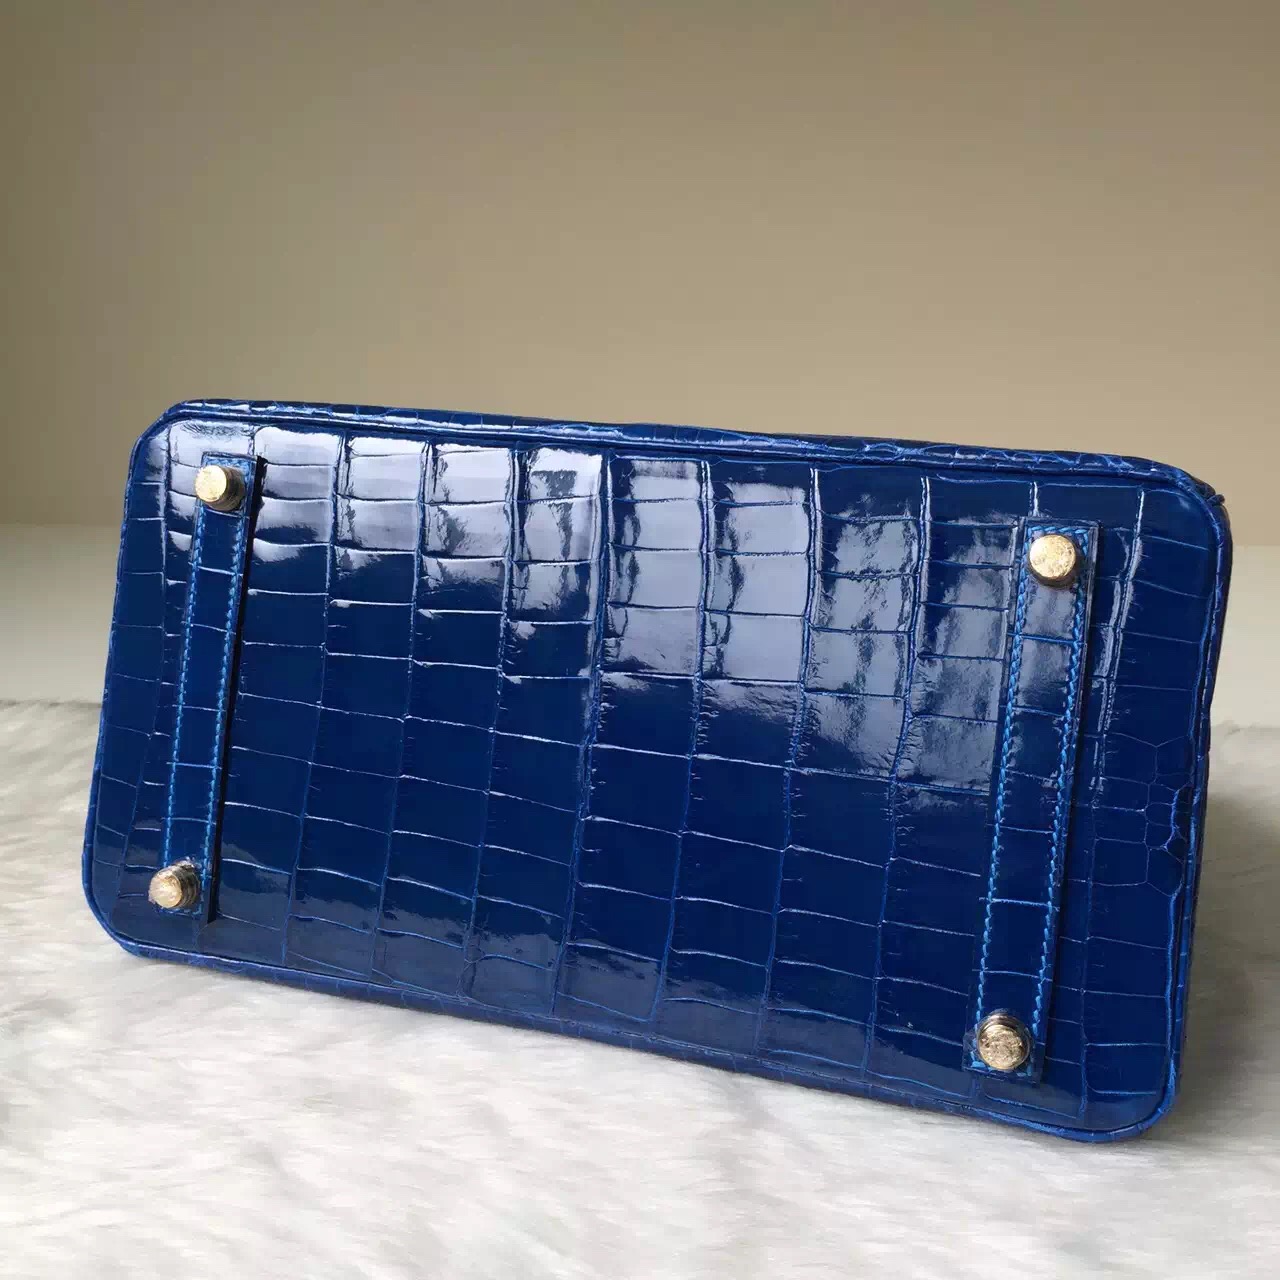 Luxury Hermes Bag 7Q Mykono Blue Crocodile Shiny Leather Birkin Bag 30cm